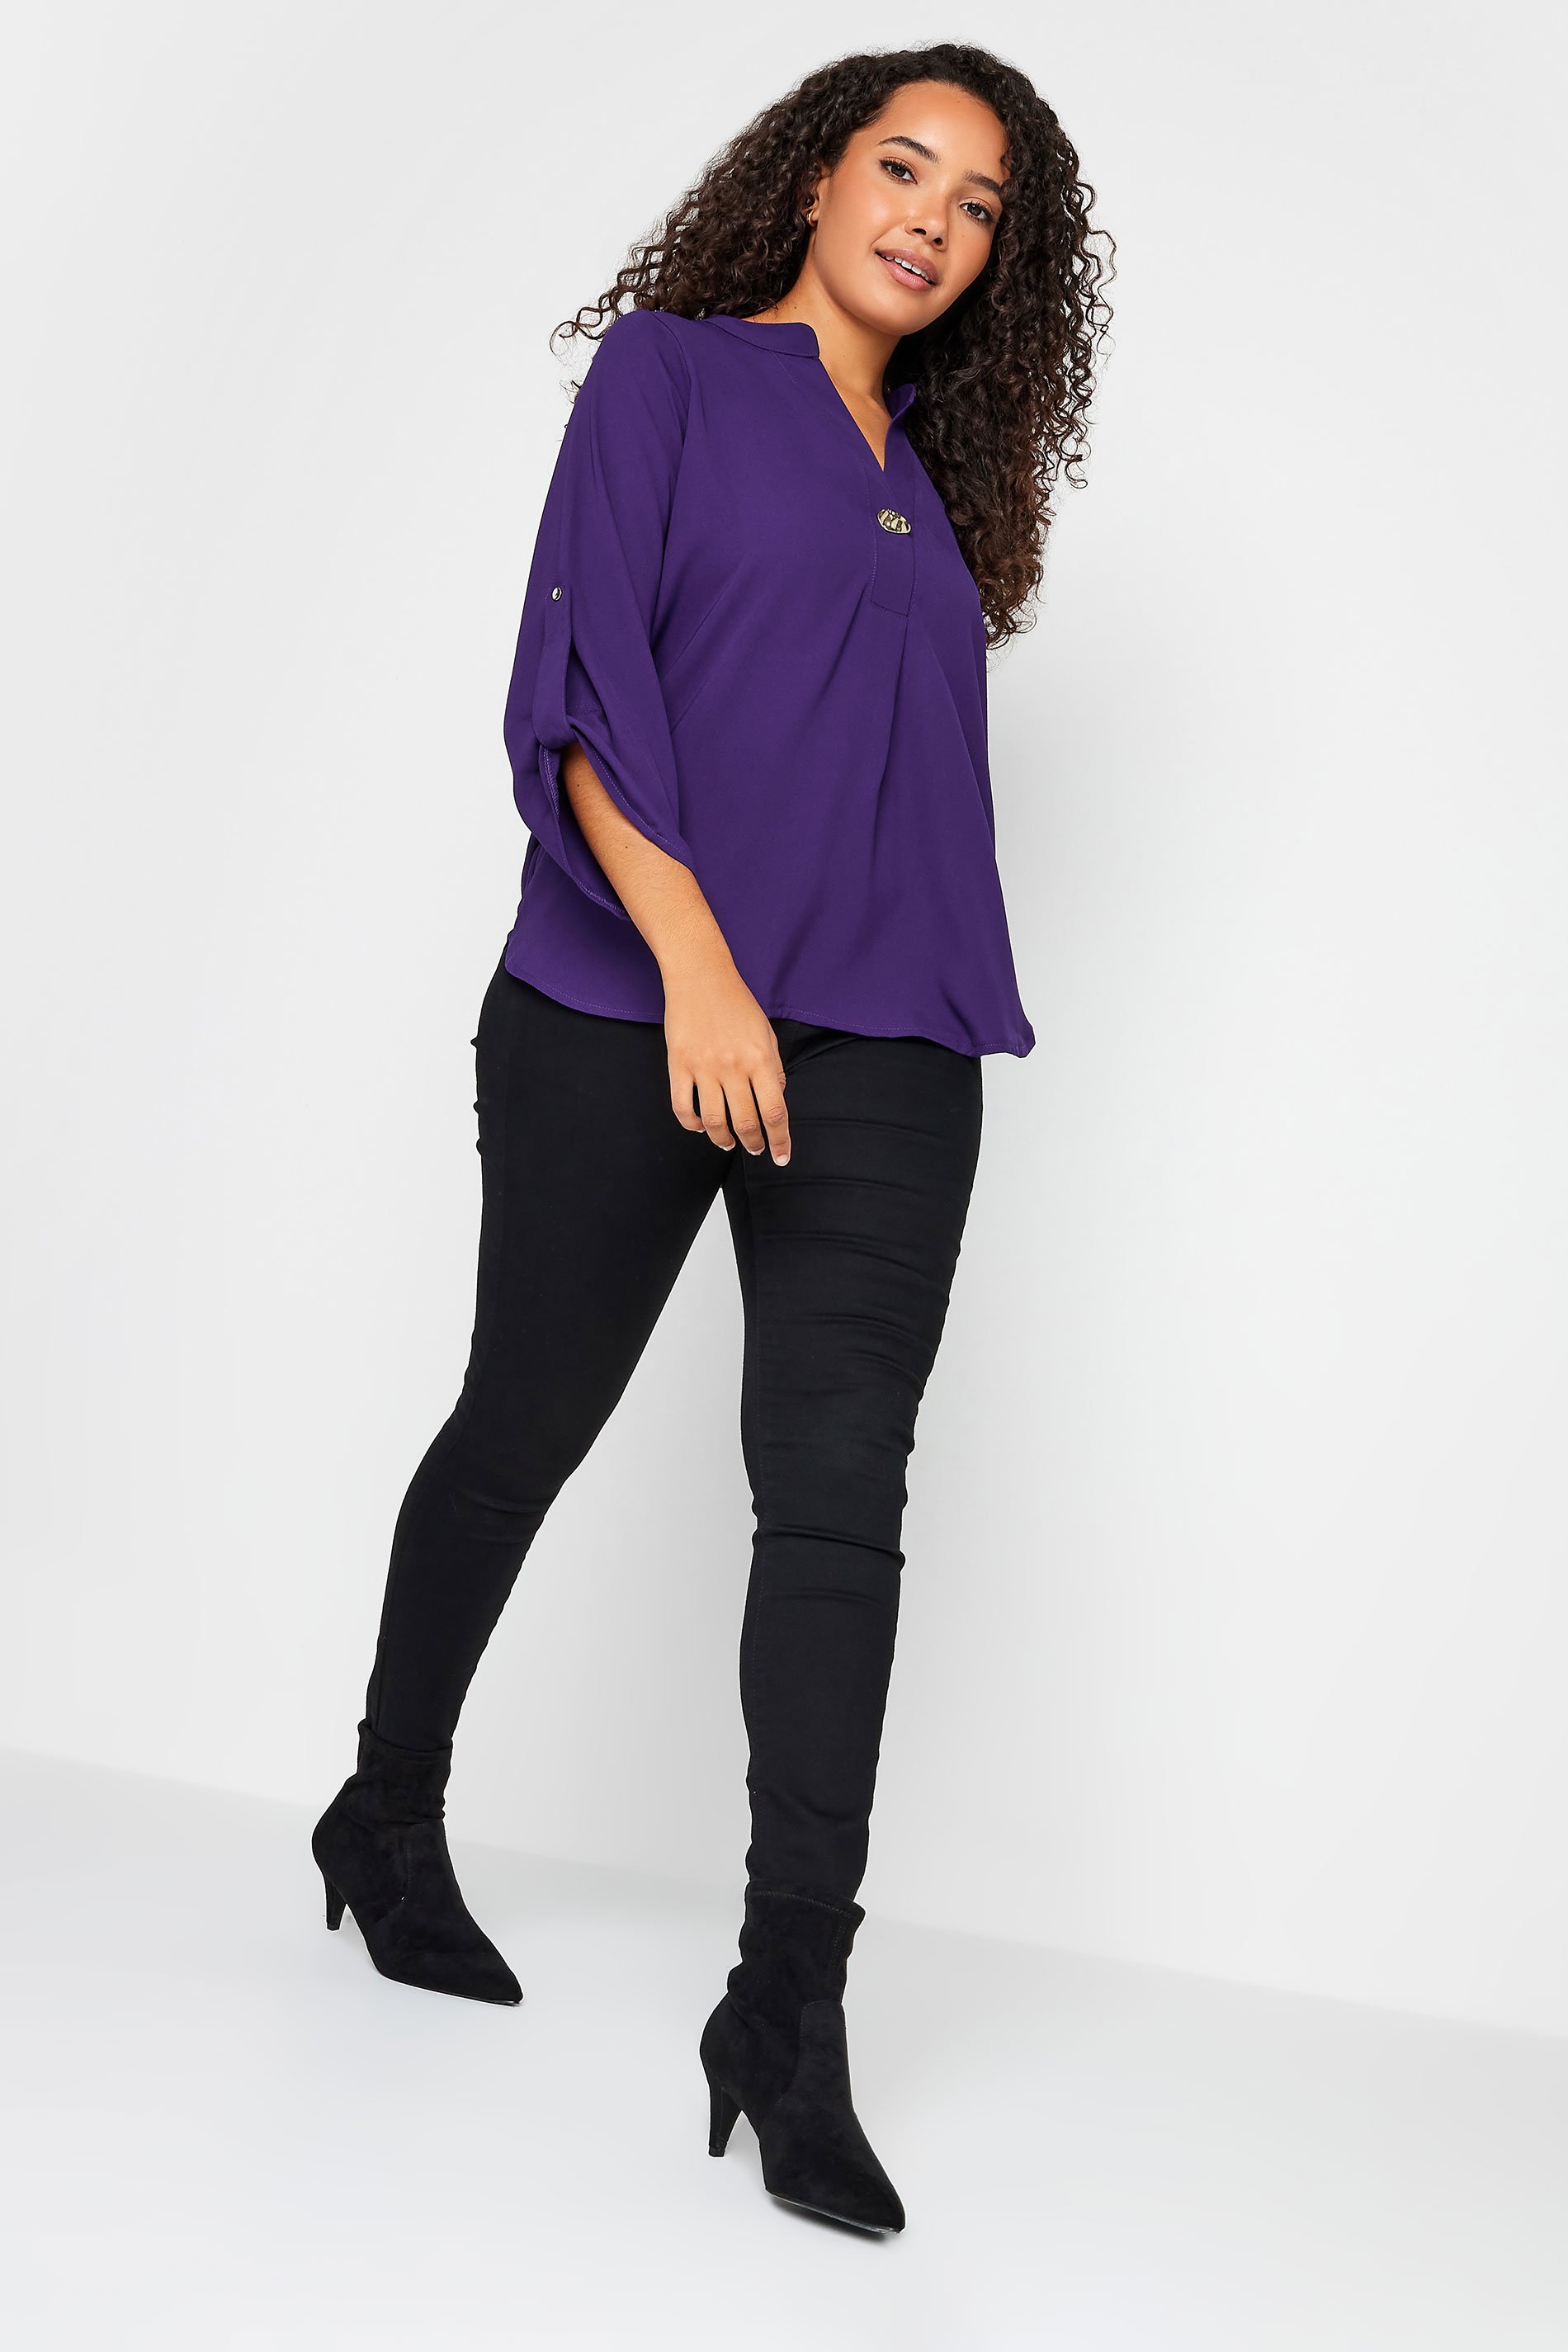 M&Co Purple Statement Button Tab Sleeve Shirt | M&Co